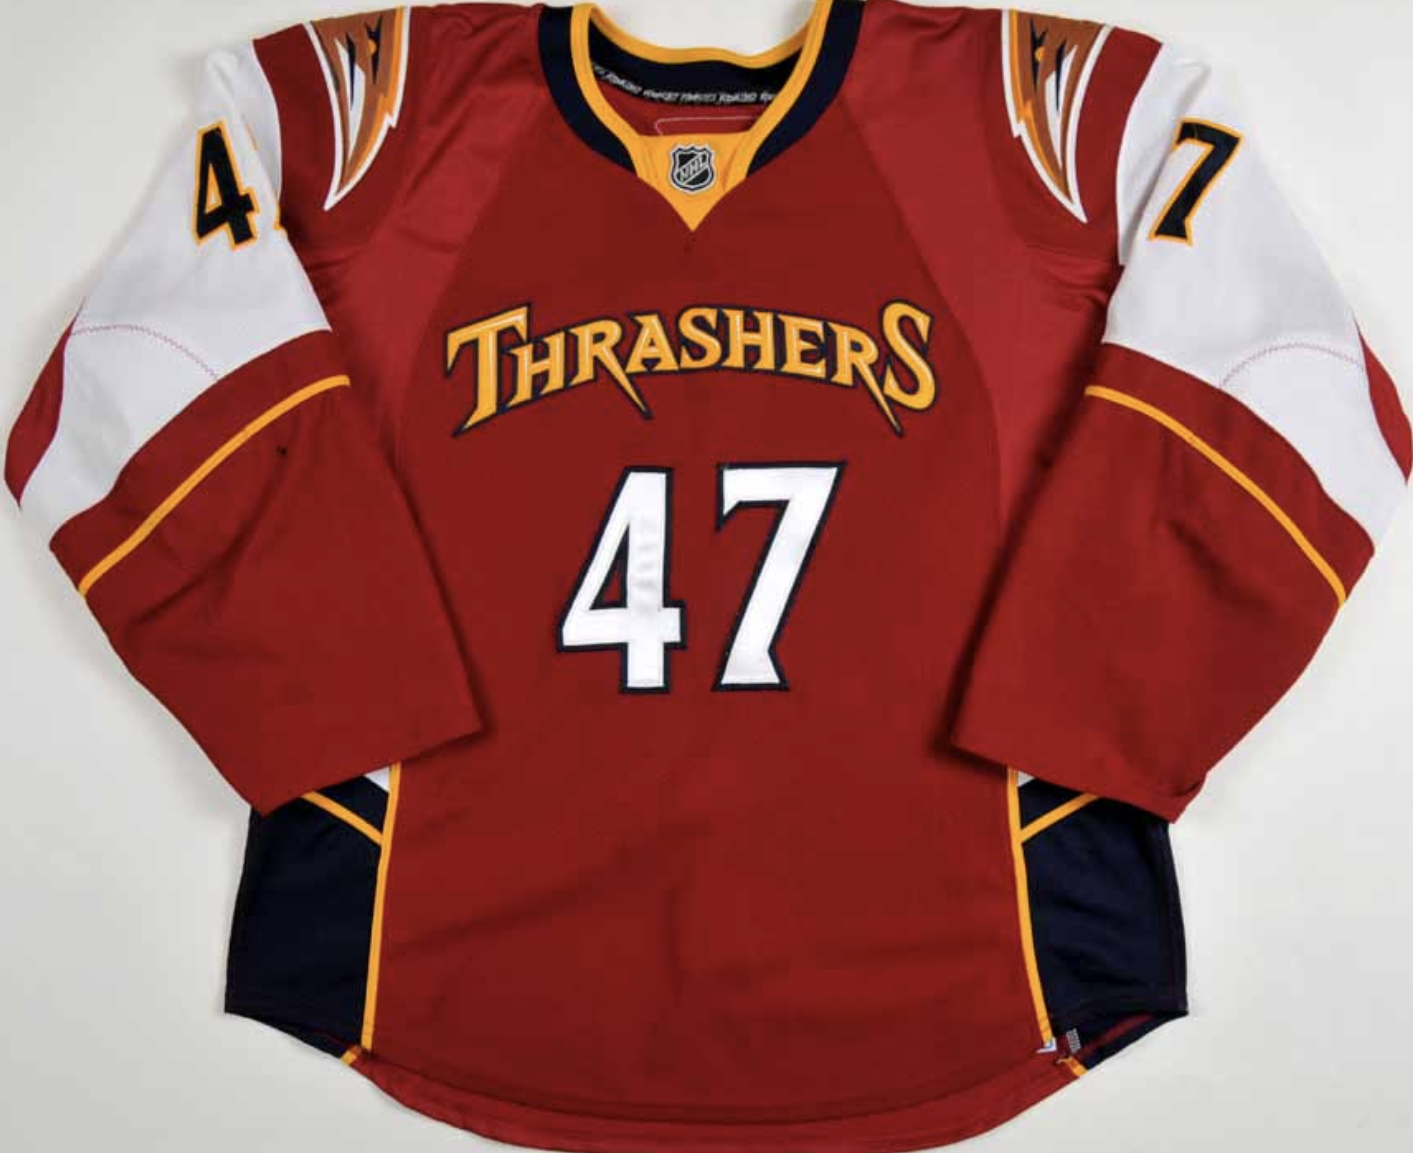 thrashers jersey